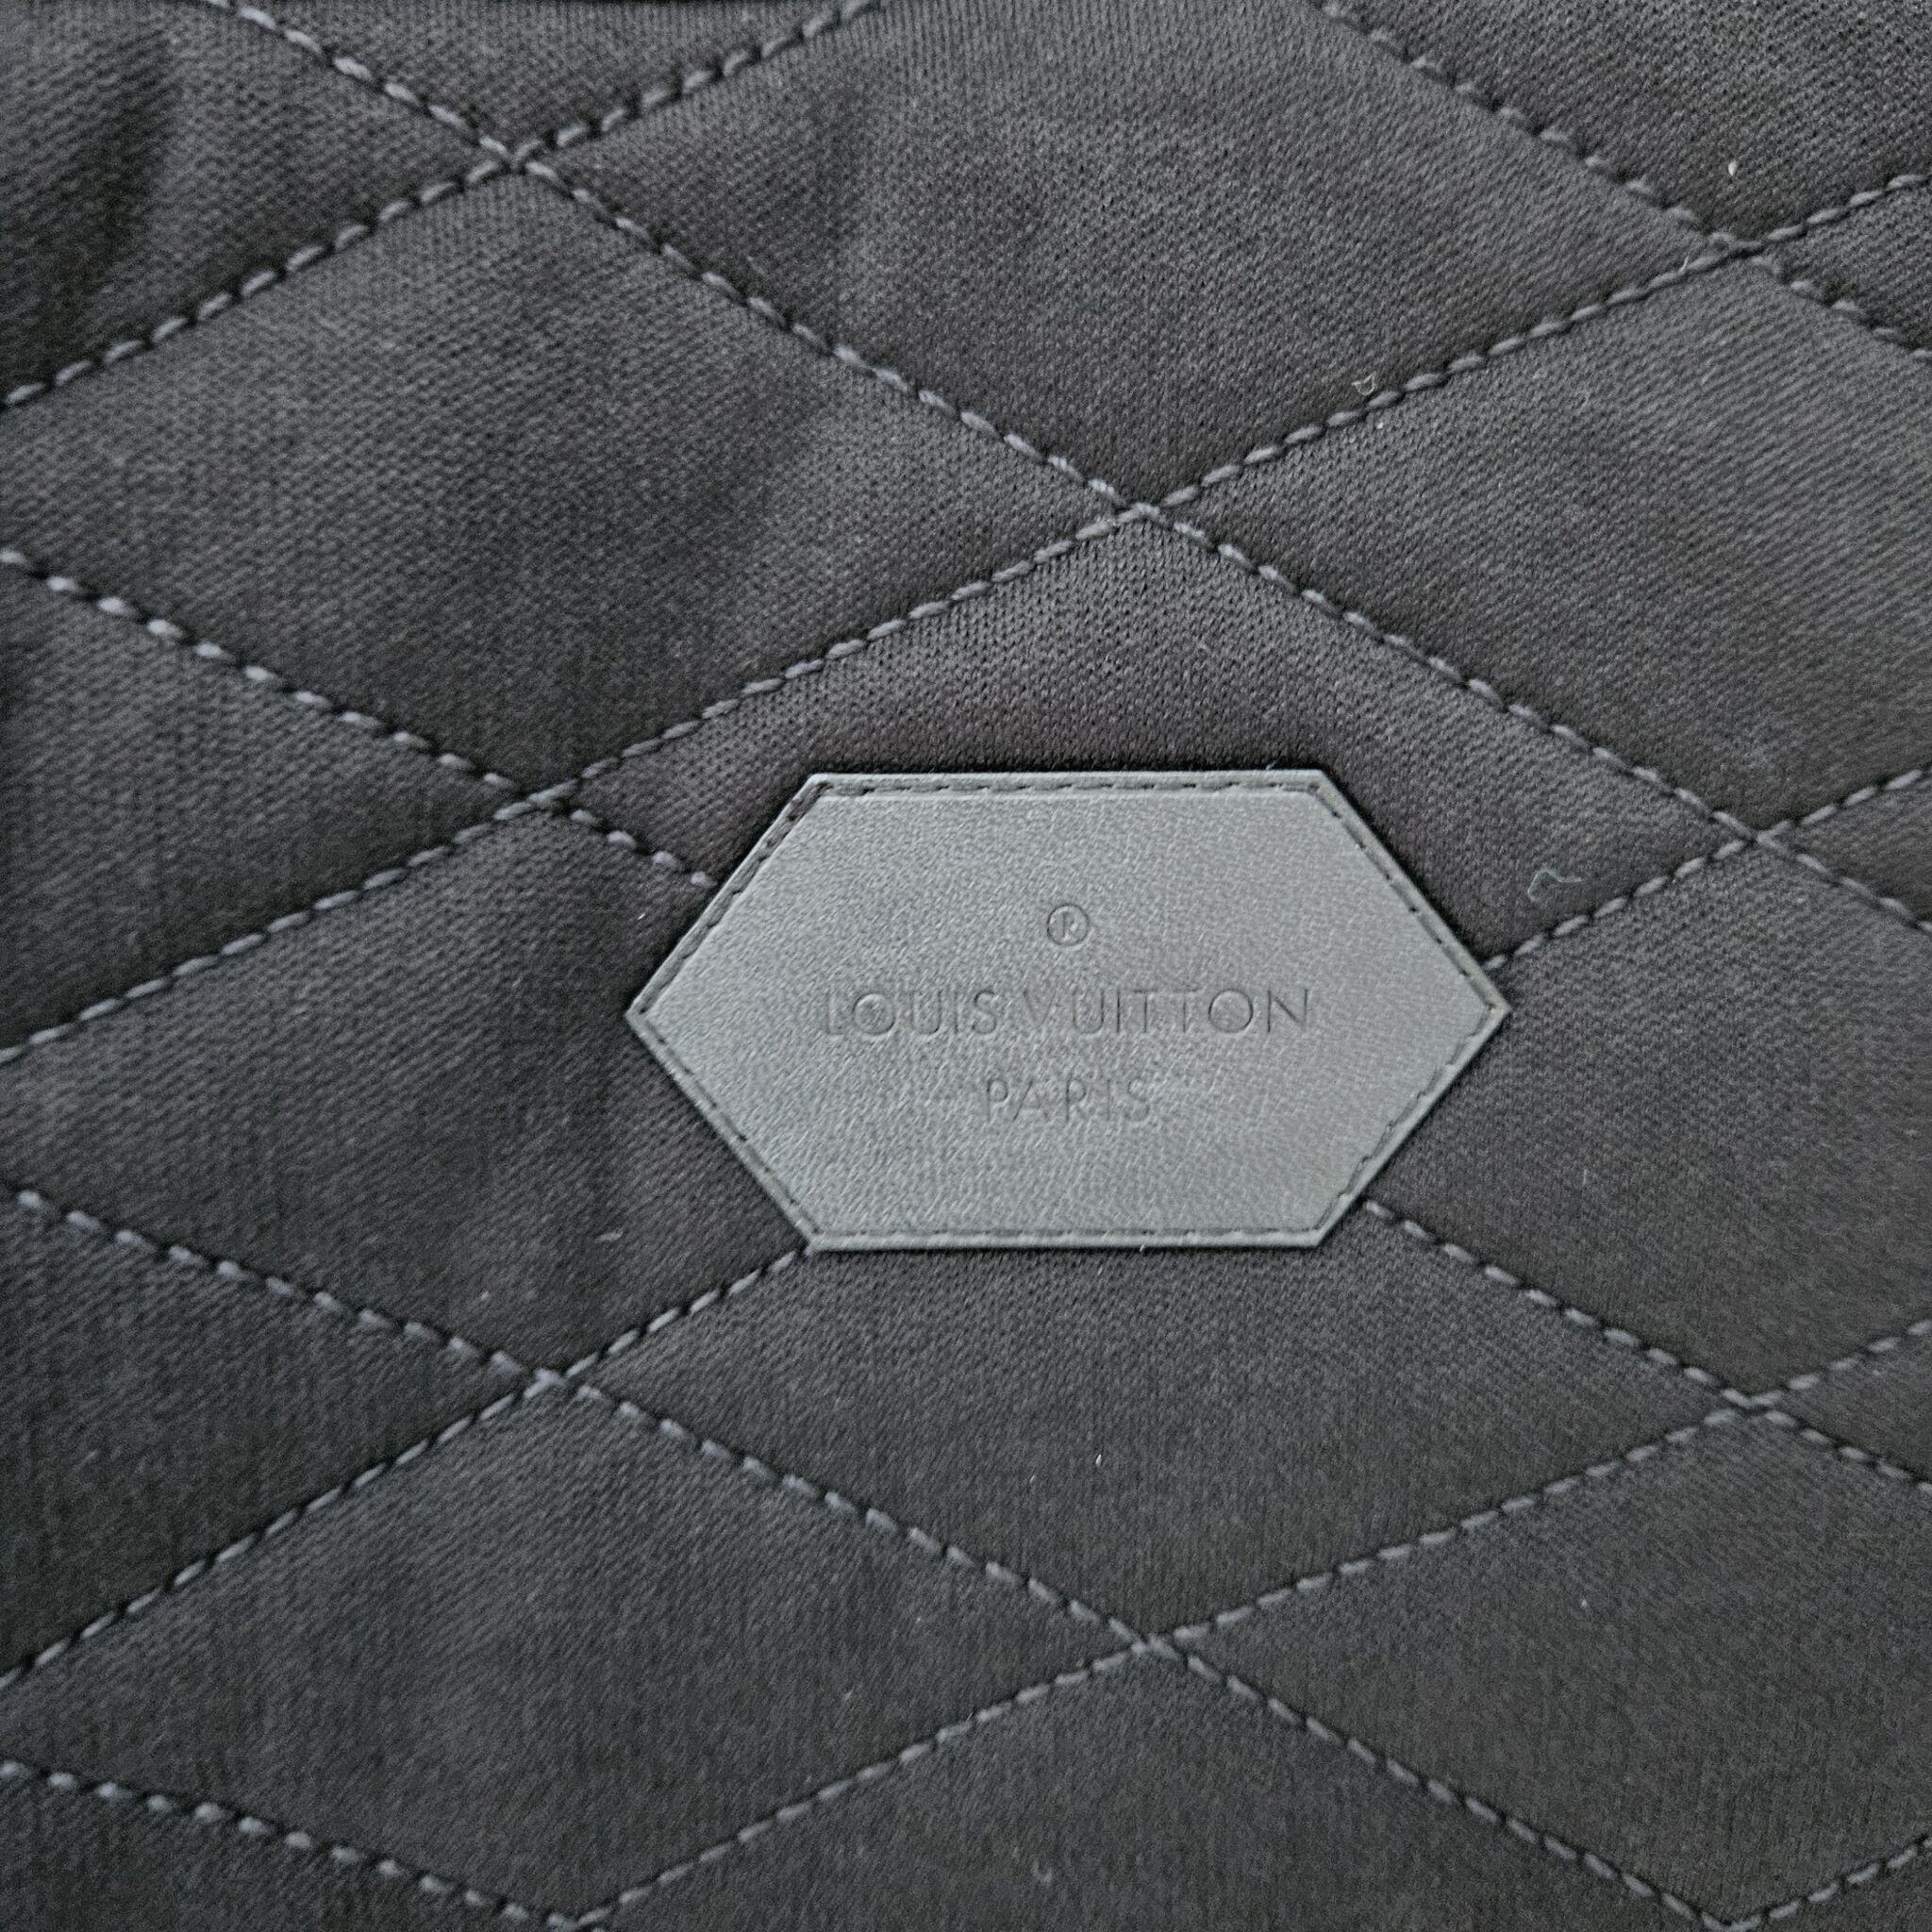 Louis Vuitton Monogram Tile Mini Skirt